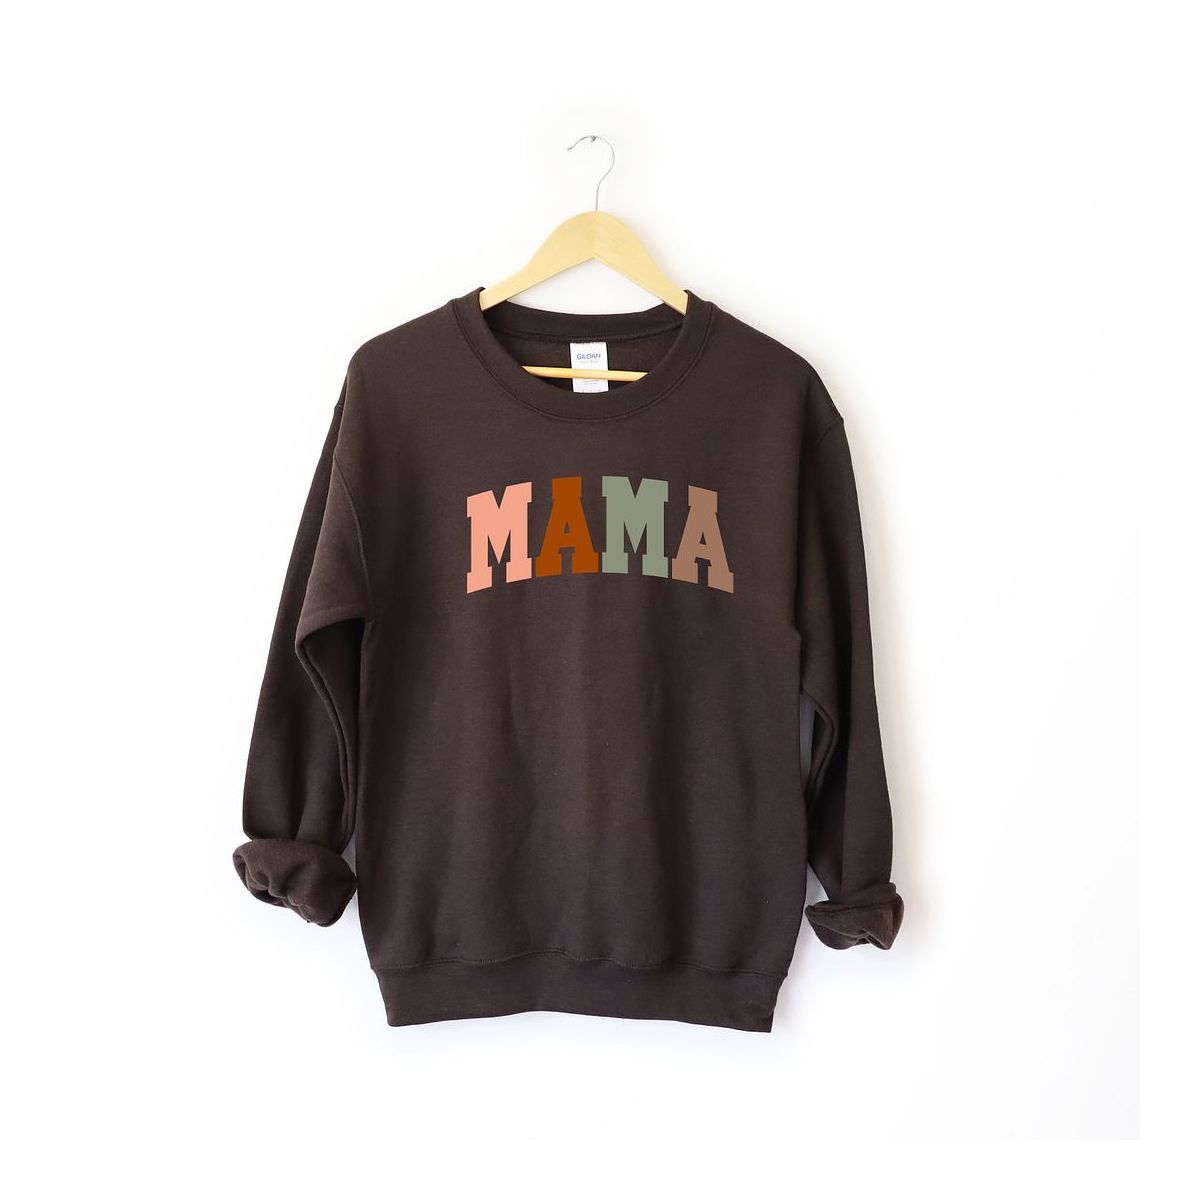 Simply Sage Market Women's Graphic Sweatshirt Mama Block Colorful Bold - S - Chocolate | Target